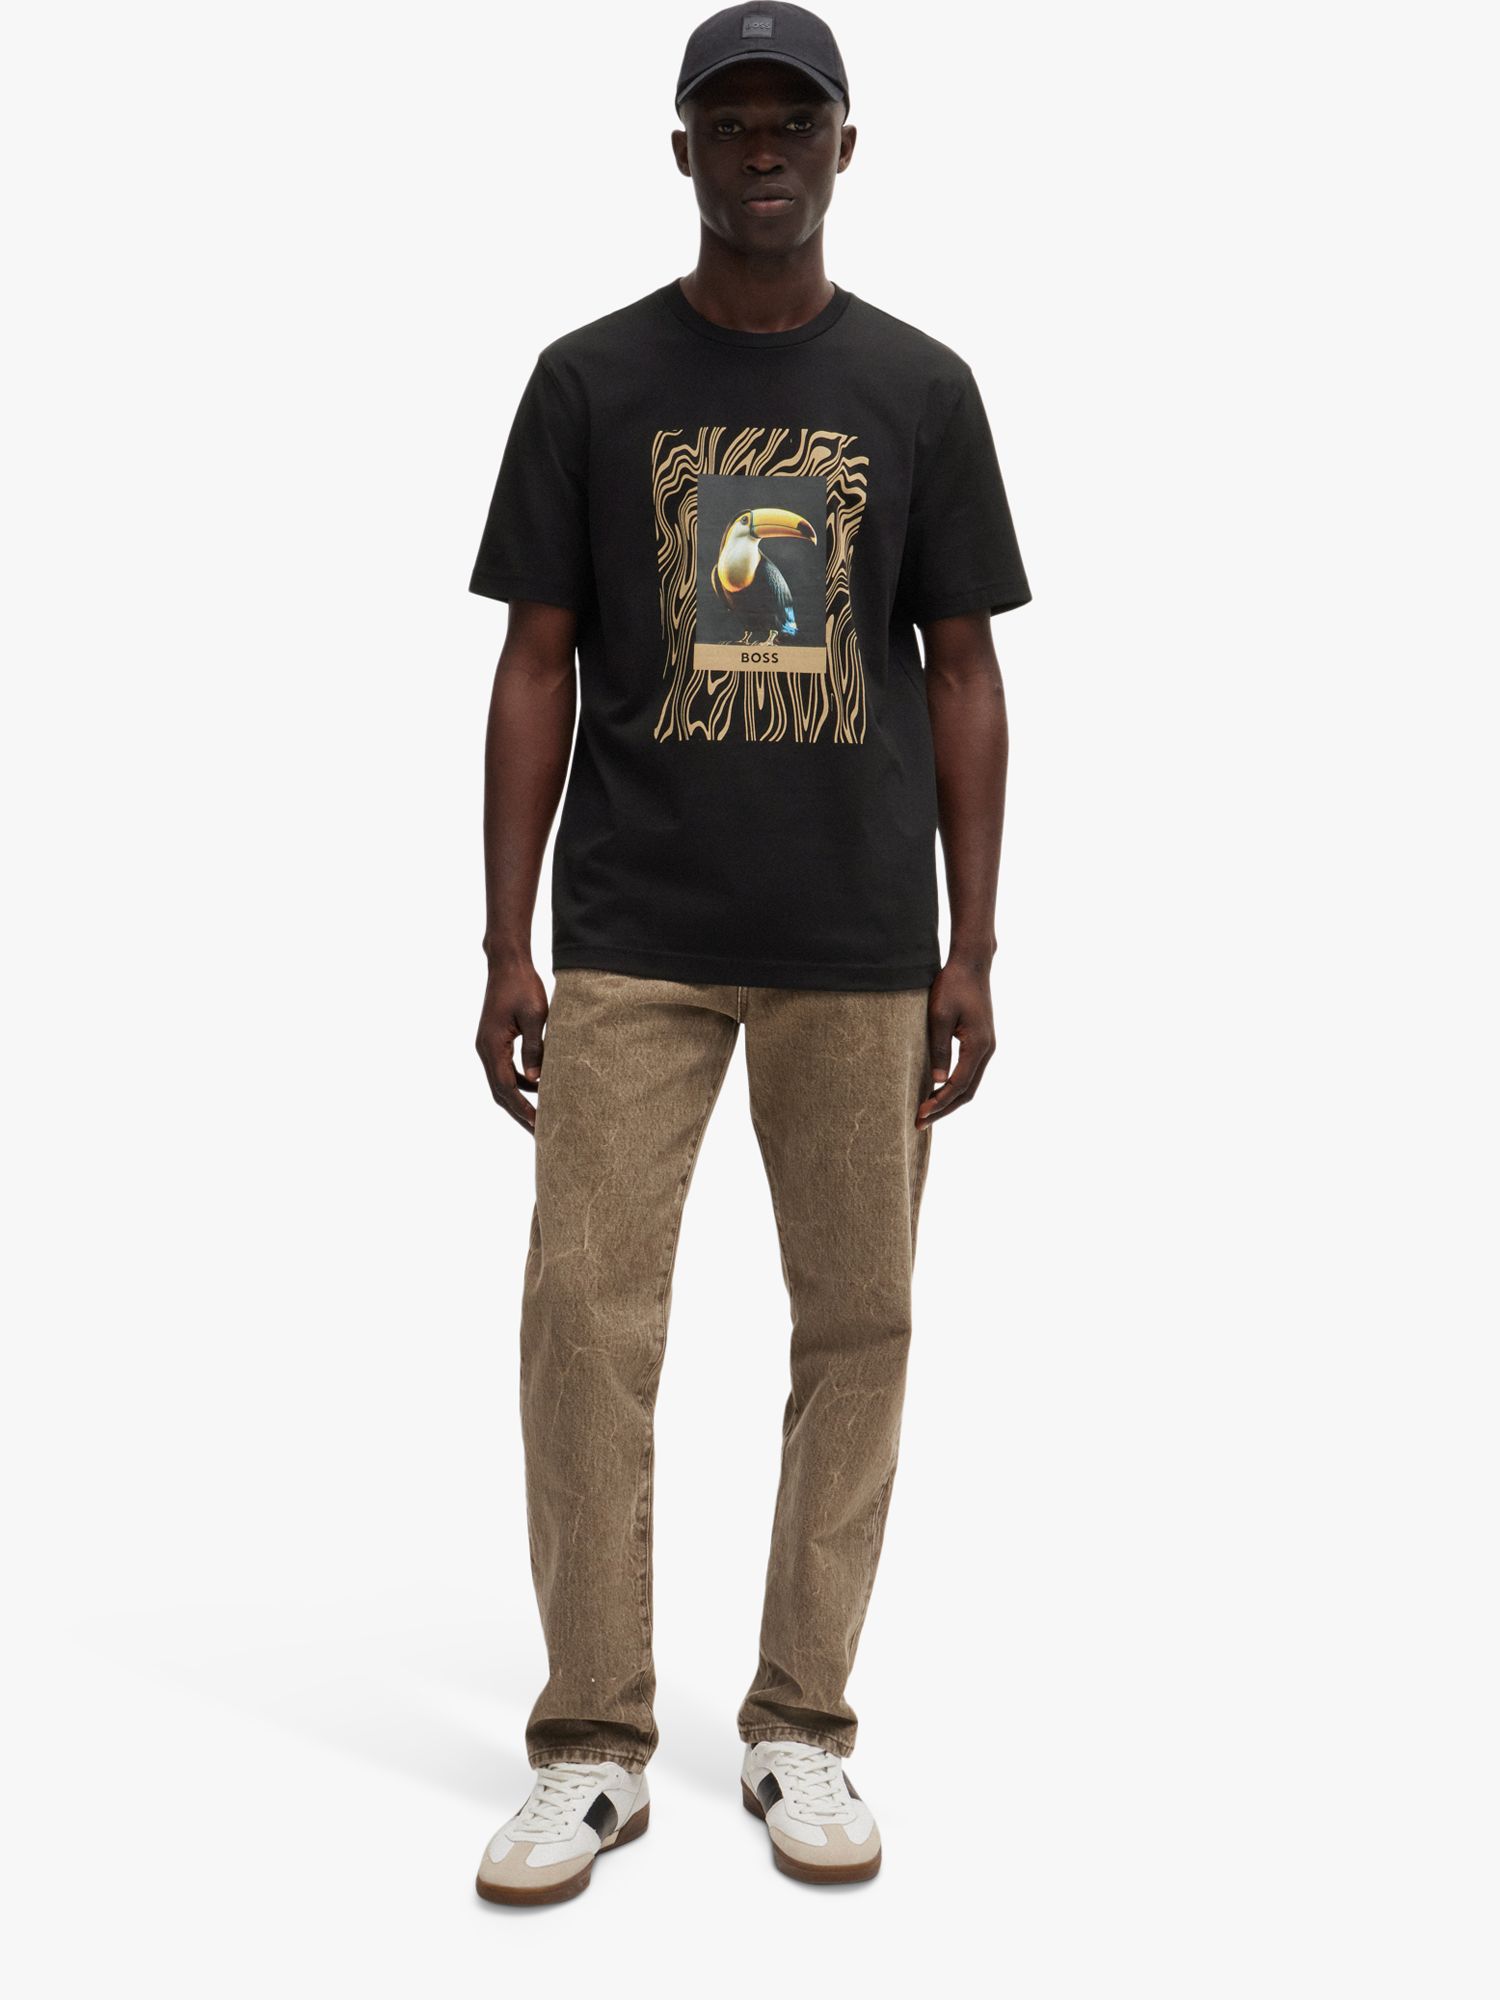 BOSS Tucan Regular Fit T-Shirt, Black, S